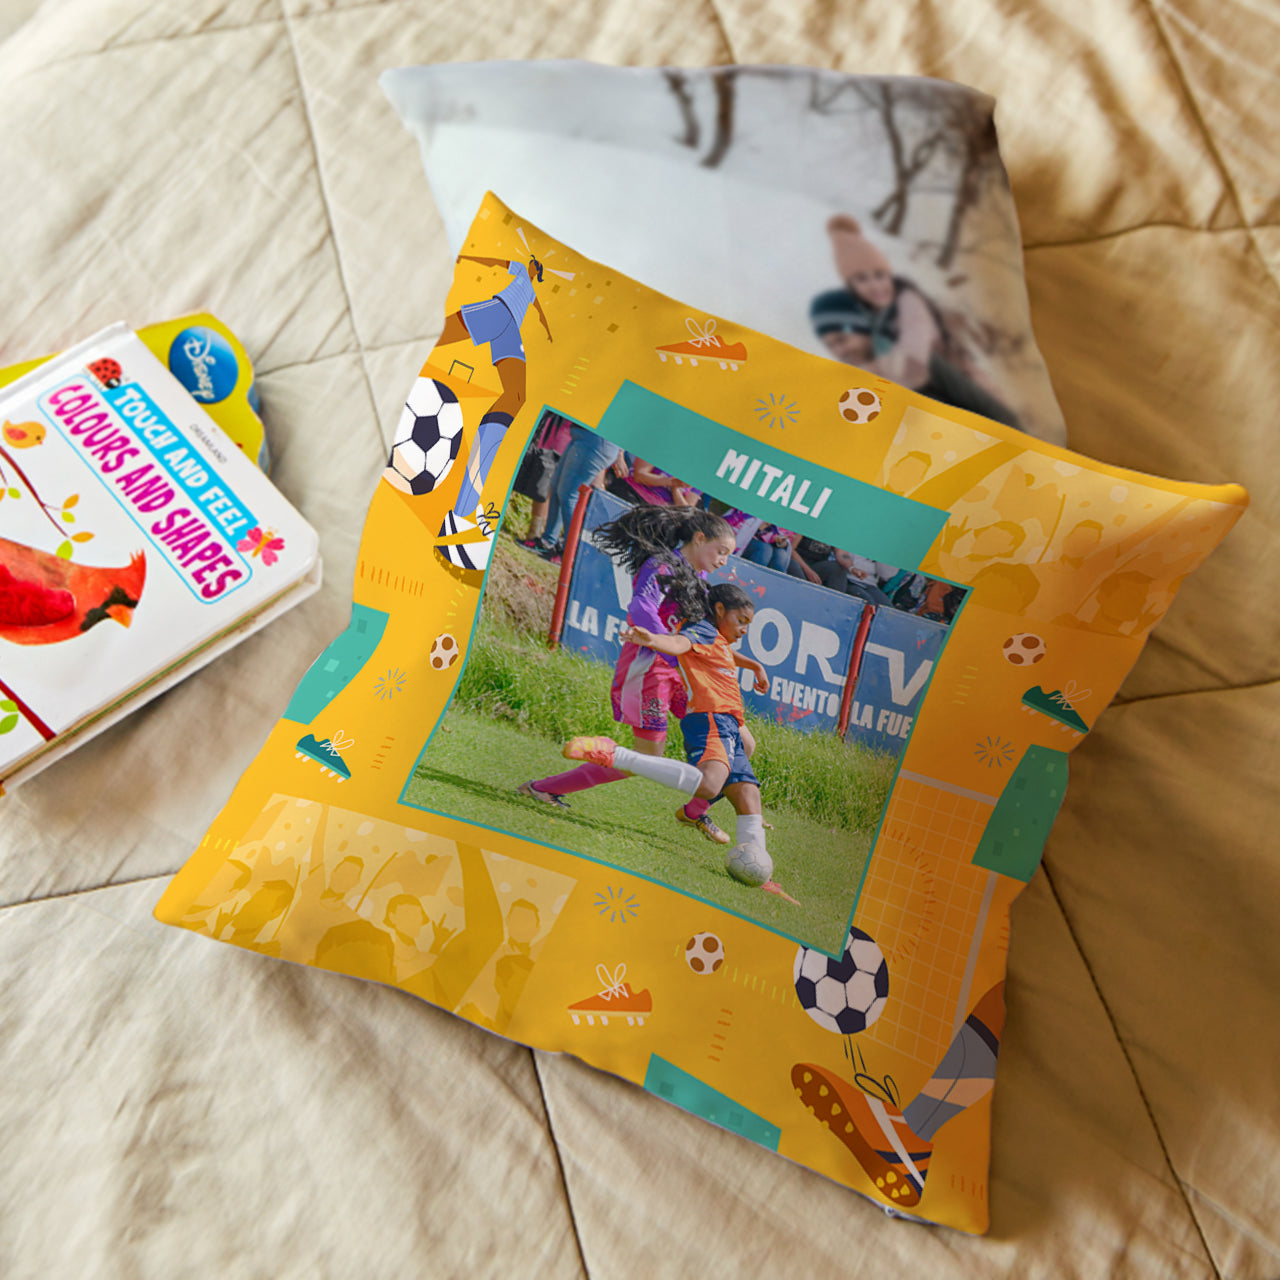 Personalised Photo Cushions - Football Goals, Girl